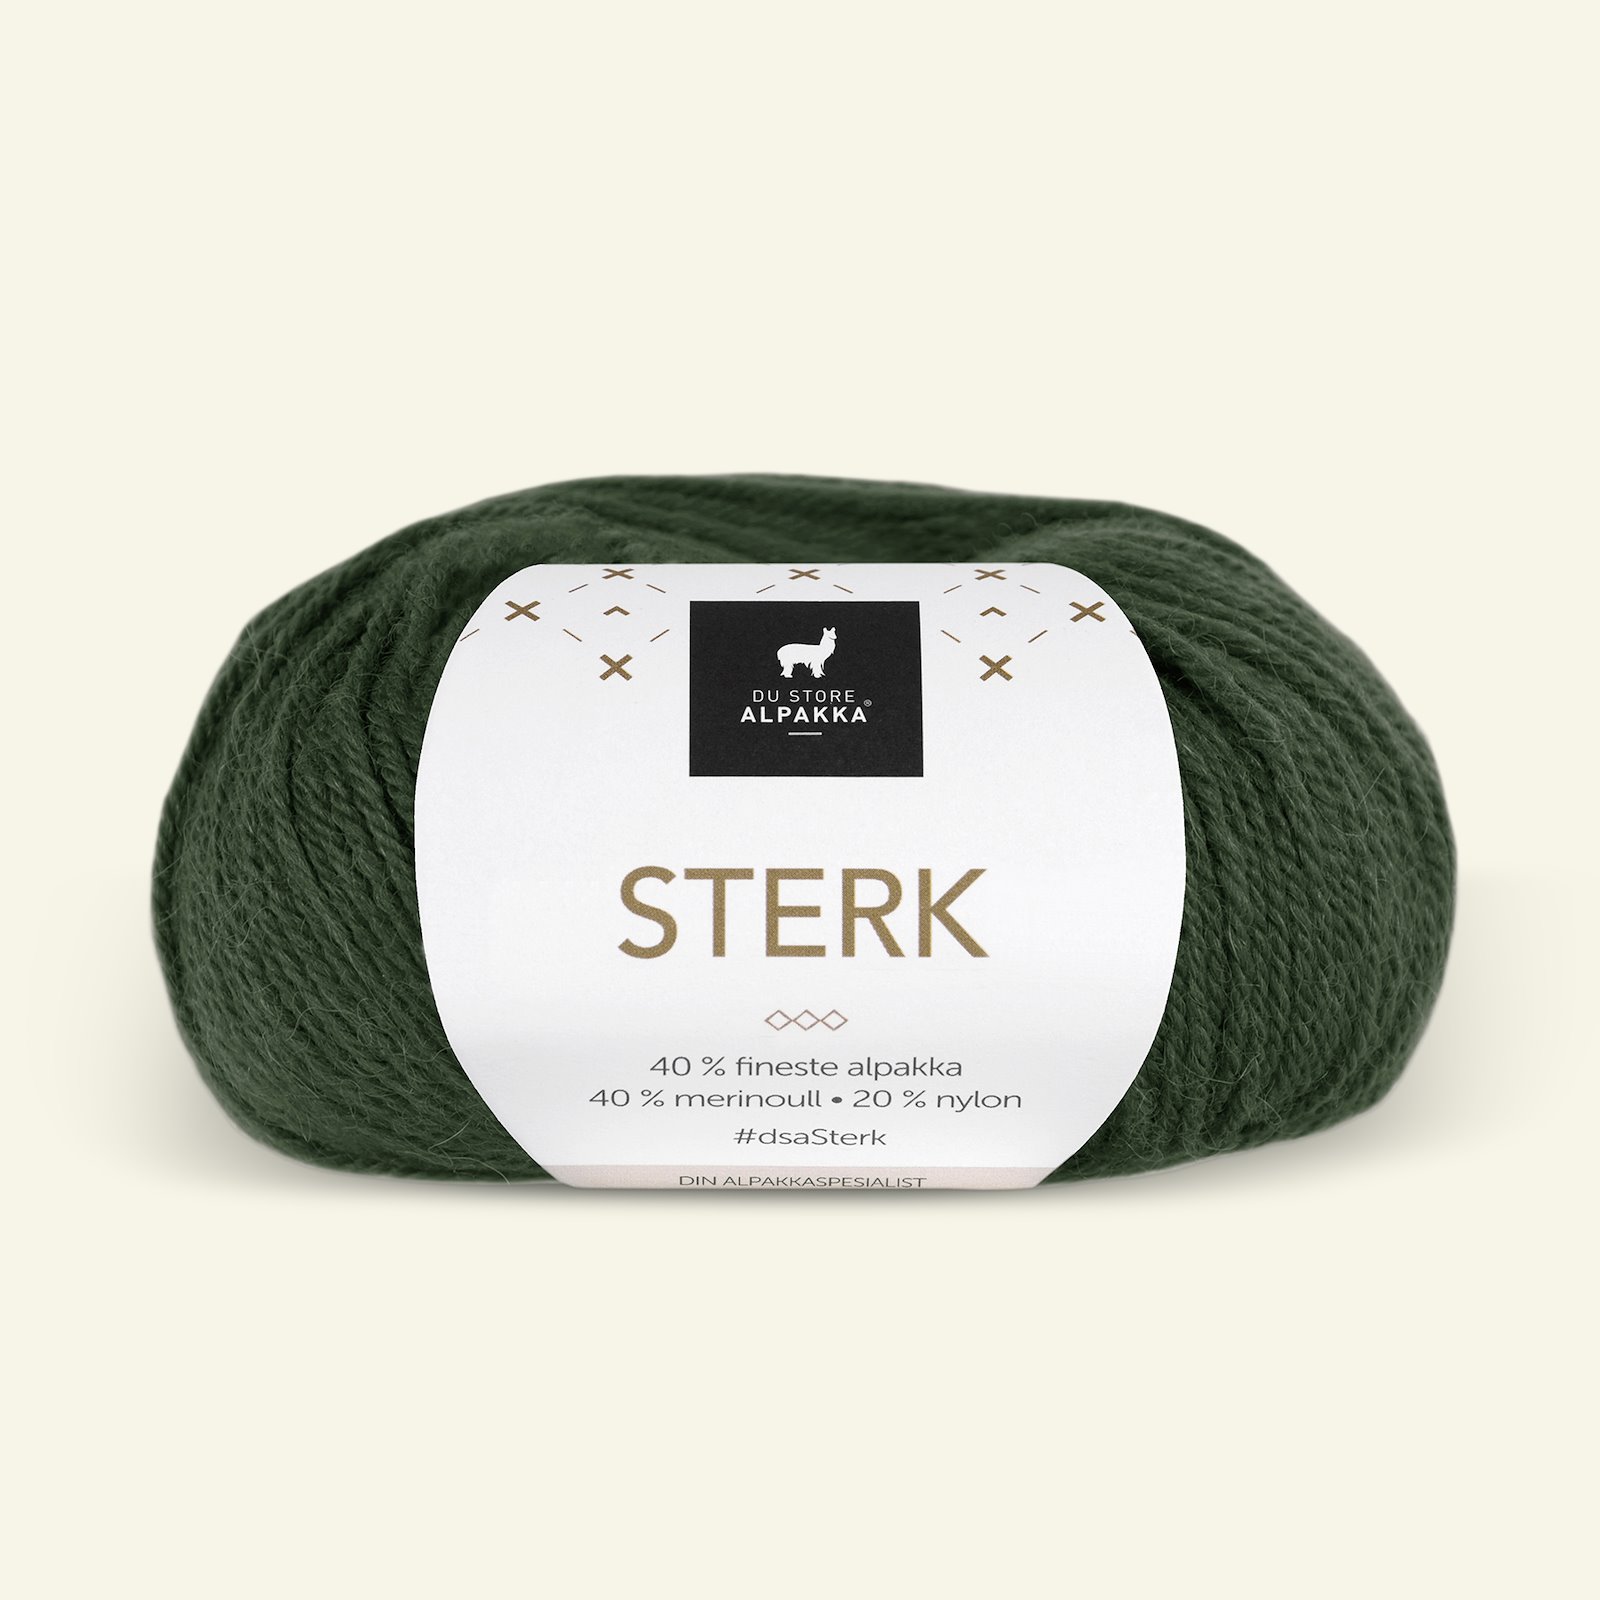 Du Store Alpakka, alpaca merino mixed yarn "Sterk", bottle green (860) 90000682_pack_b